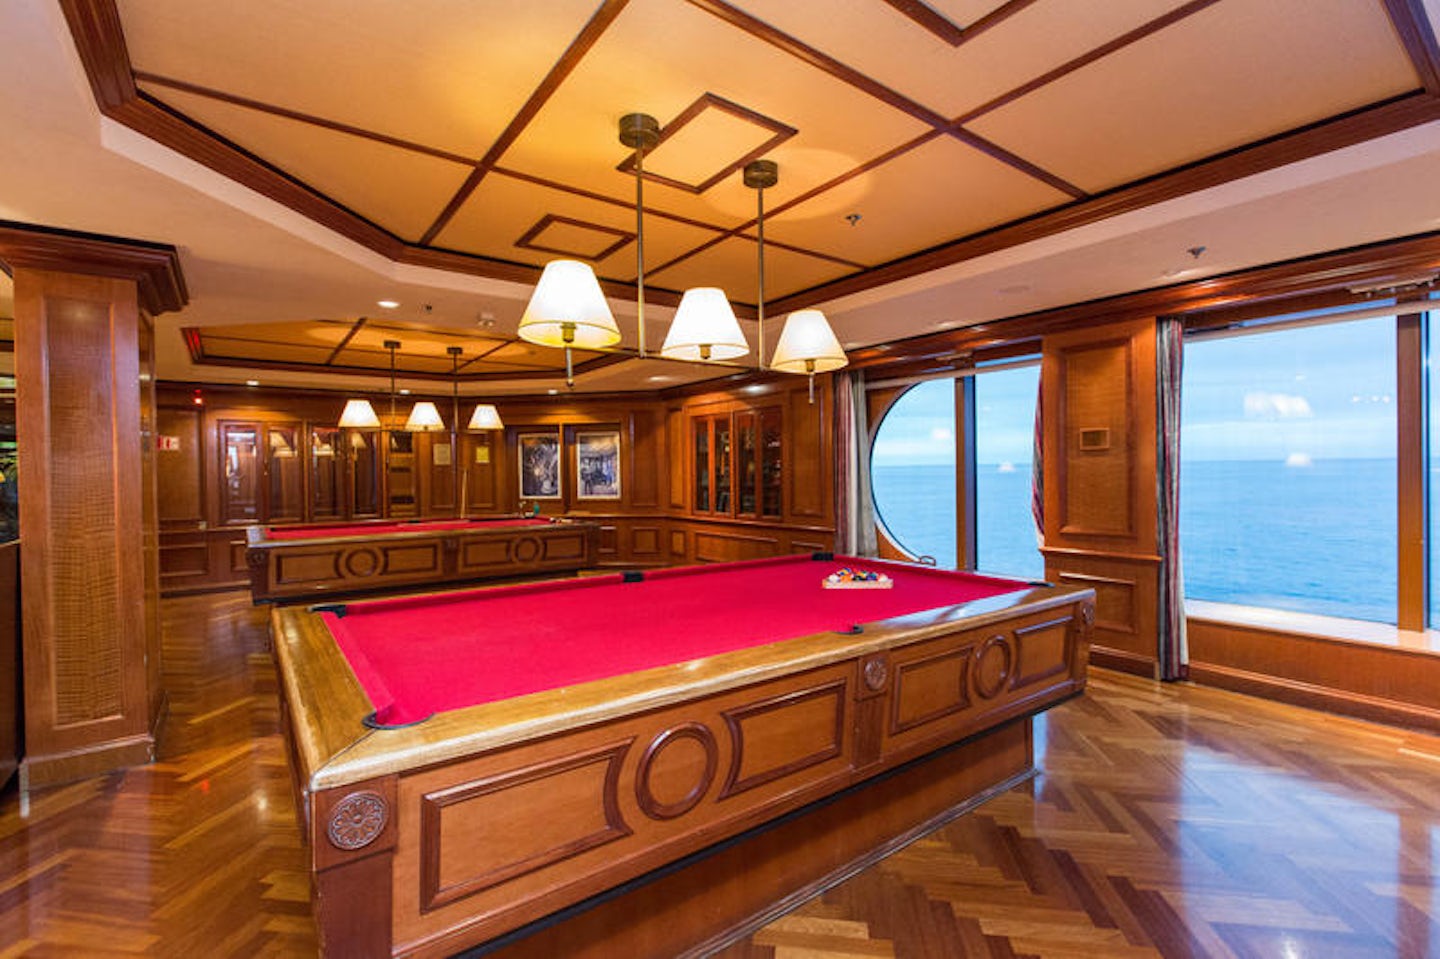 Bombay Billiard Club on Radiance of the Seas